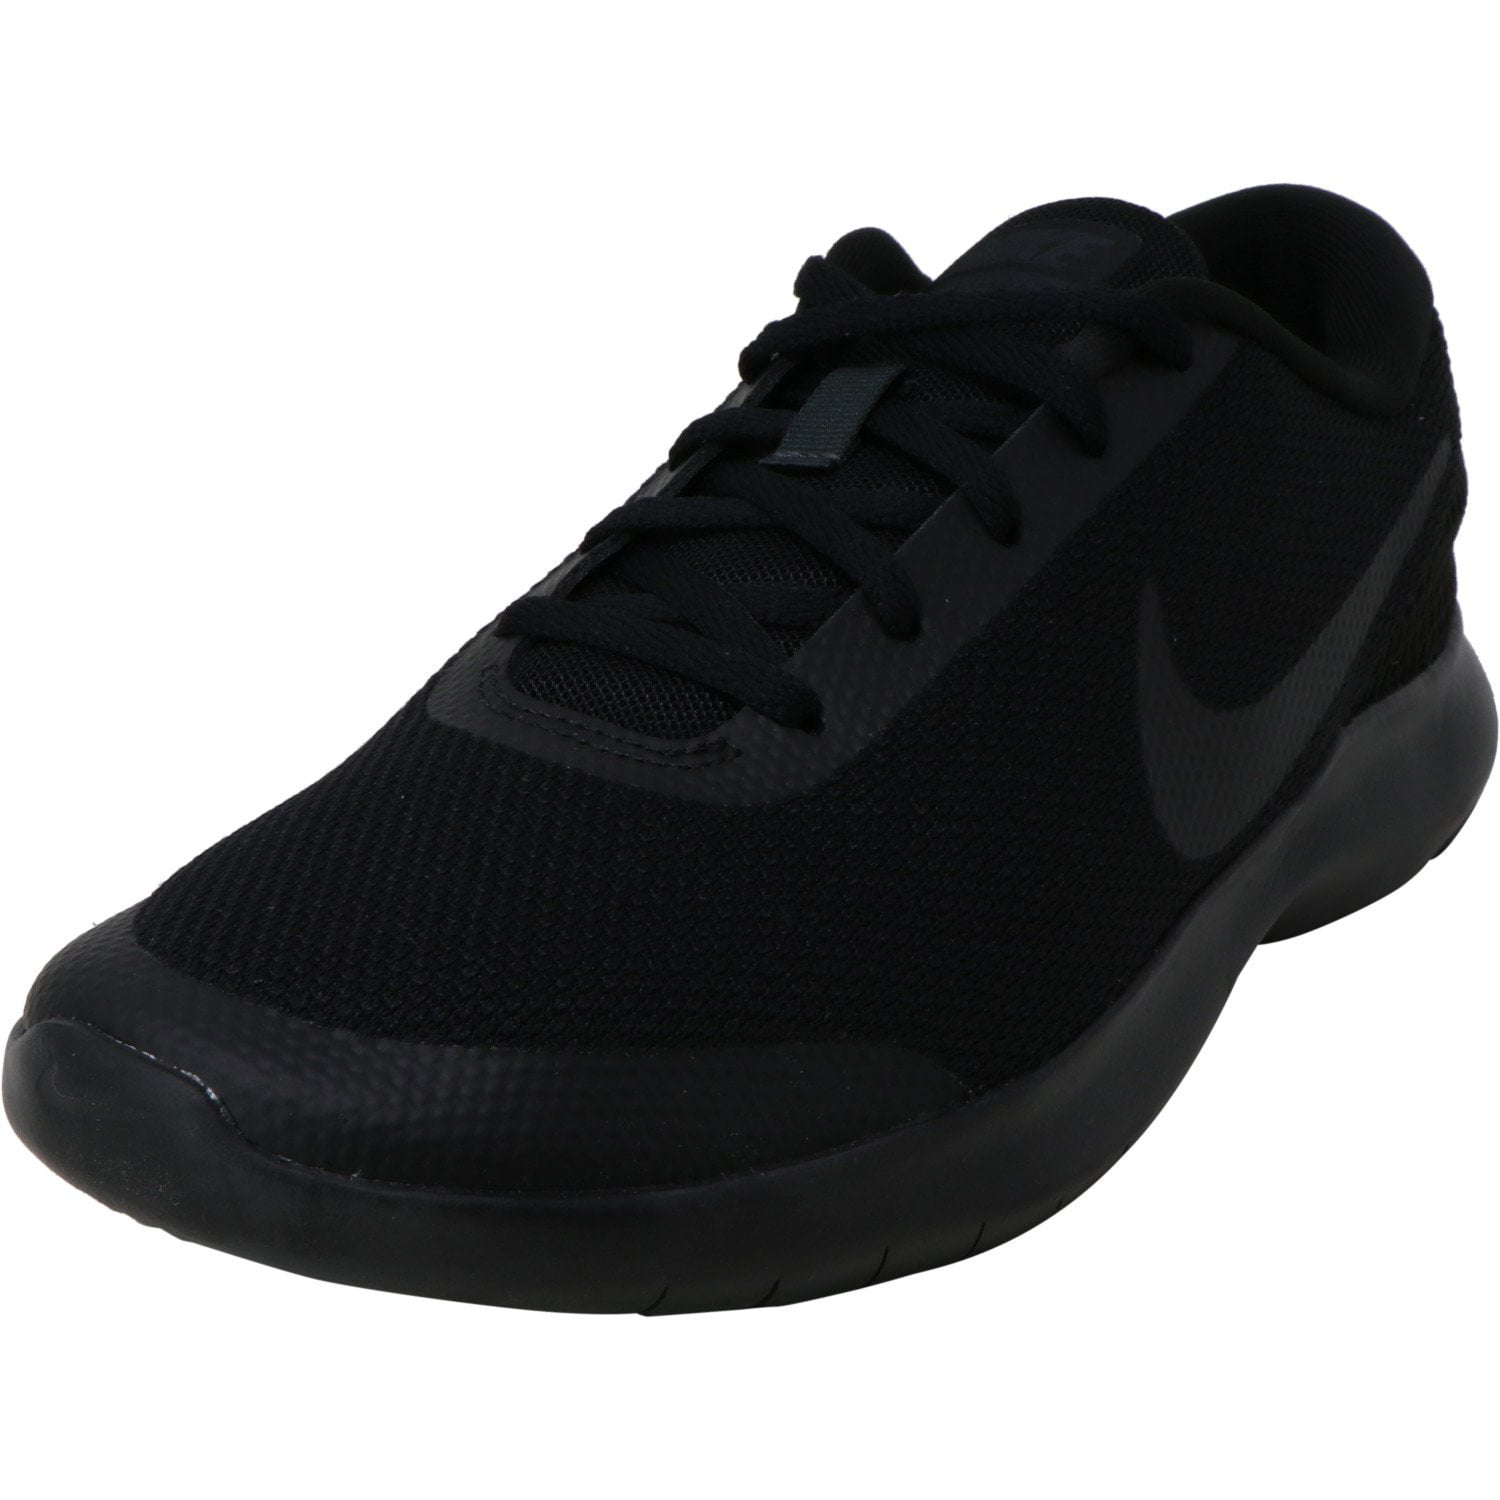 Nike - Nike Women's Flex Experience Rn 7 Black / Black-Anthracite Ankle ...